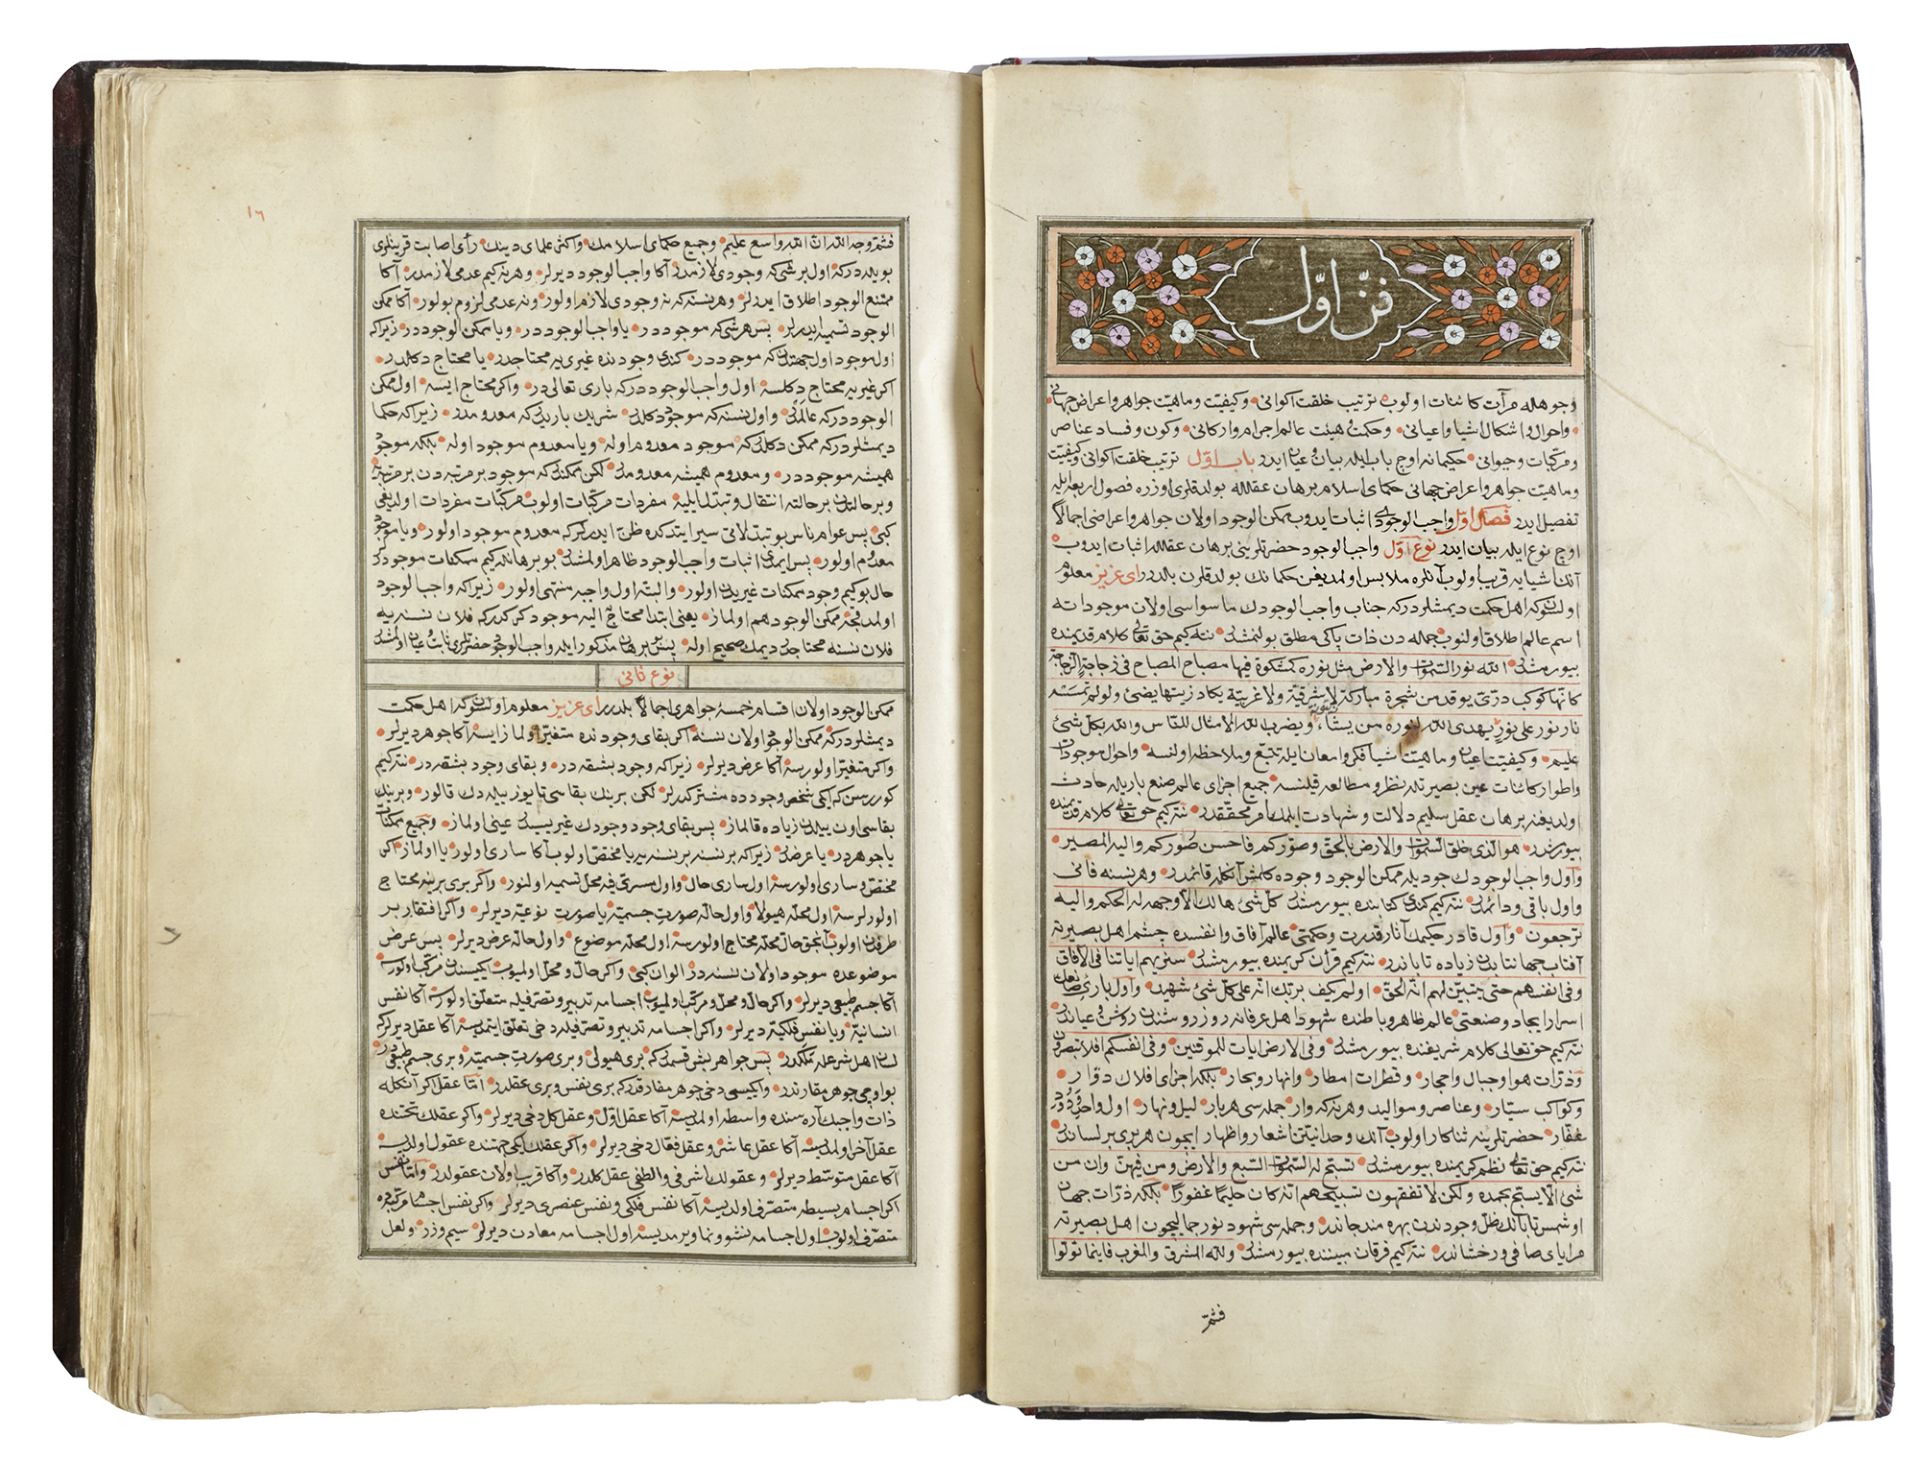 MARIFETNAME, IBRAHIM HAKKI, COPIED BY SAE'D ALLAH BIN ALI BIN AHMED, TURKEY, 1221 AH/1806 AD - Bild 19 aus 58